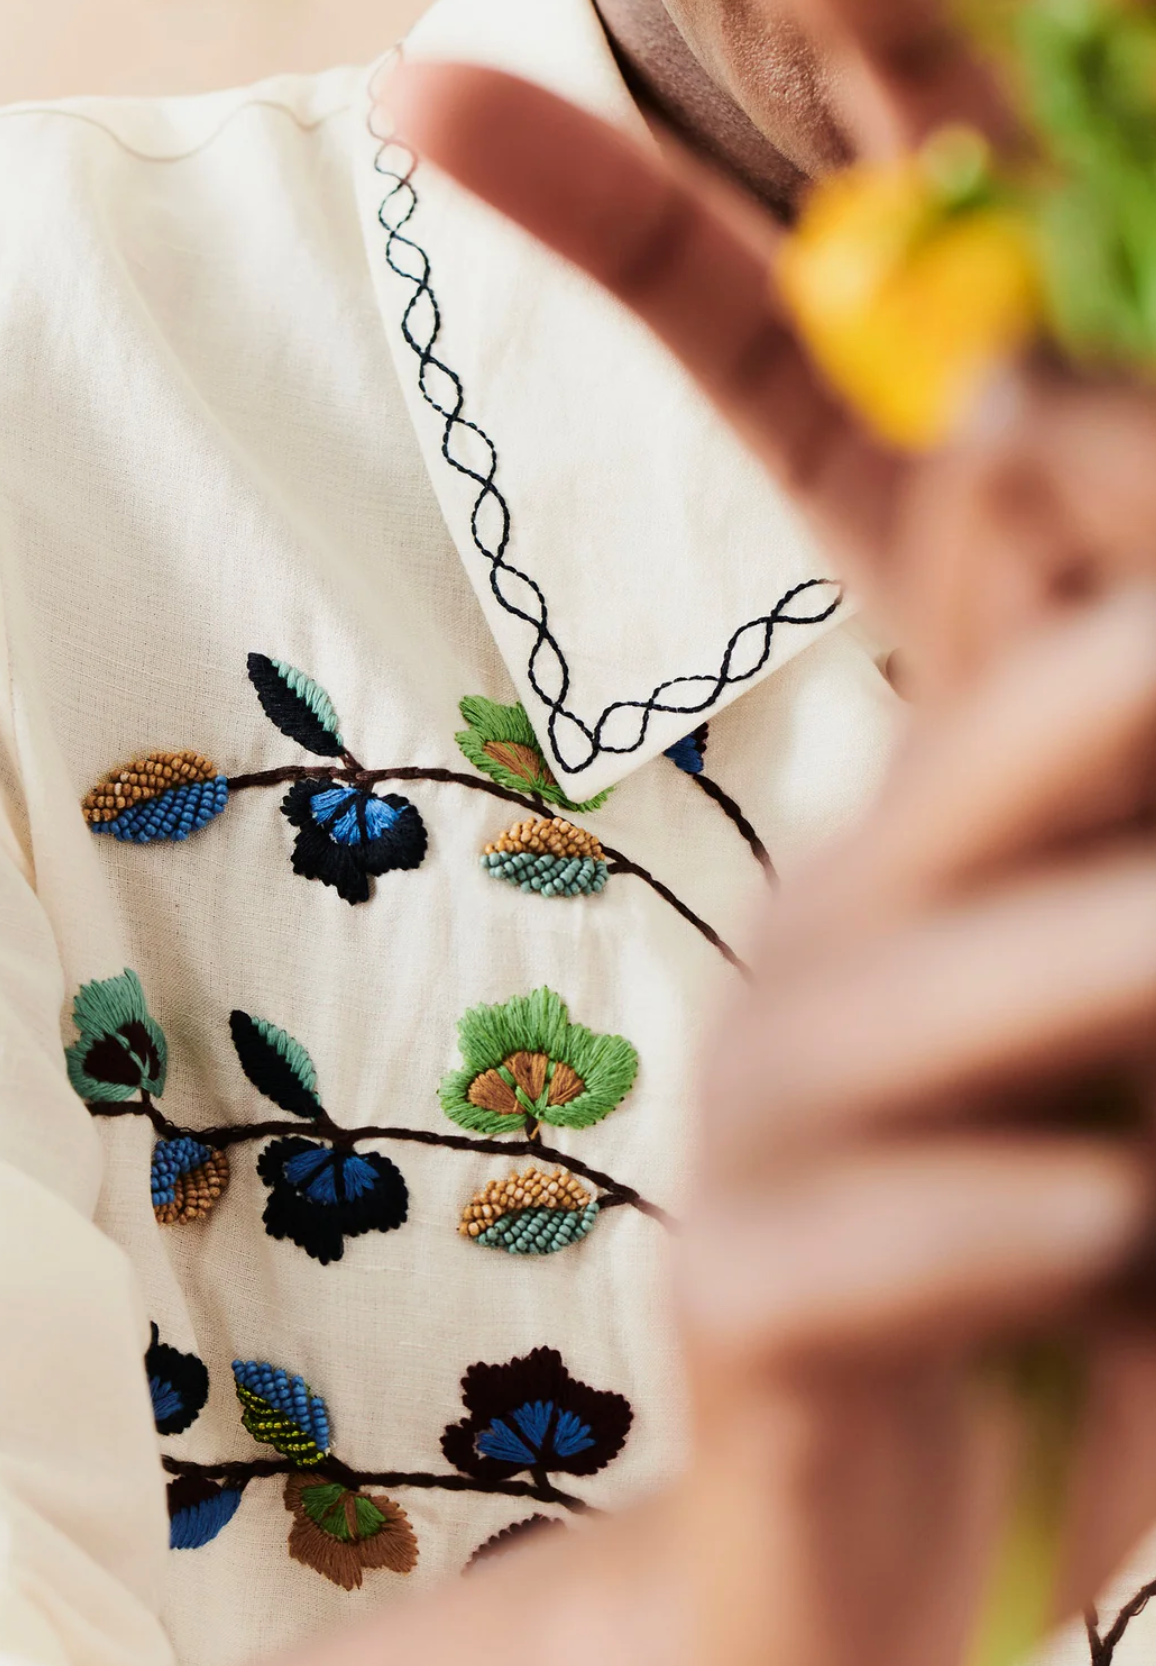 Trailing Flower Hand Embroidered Shirt Ecru